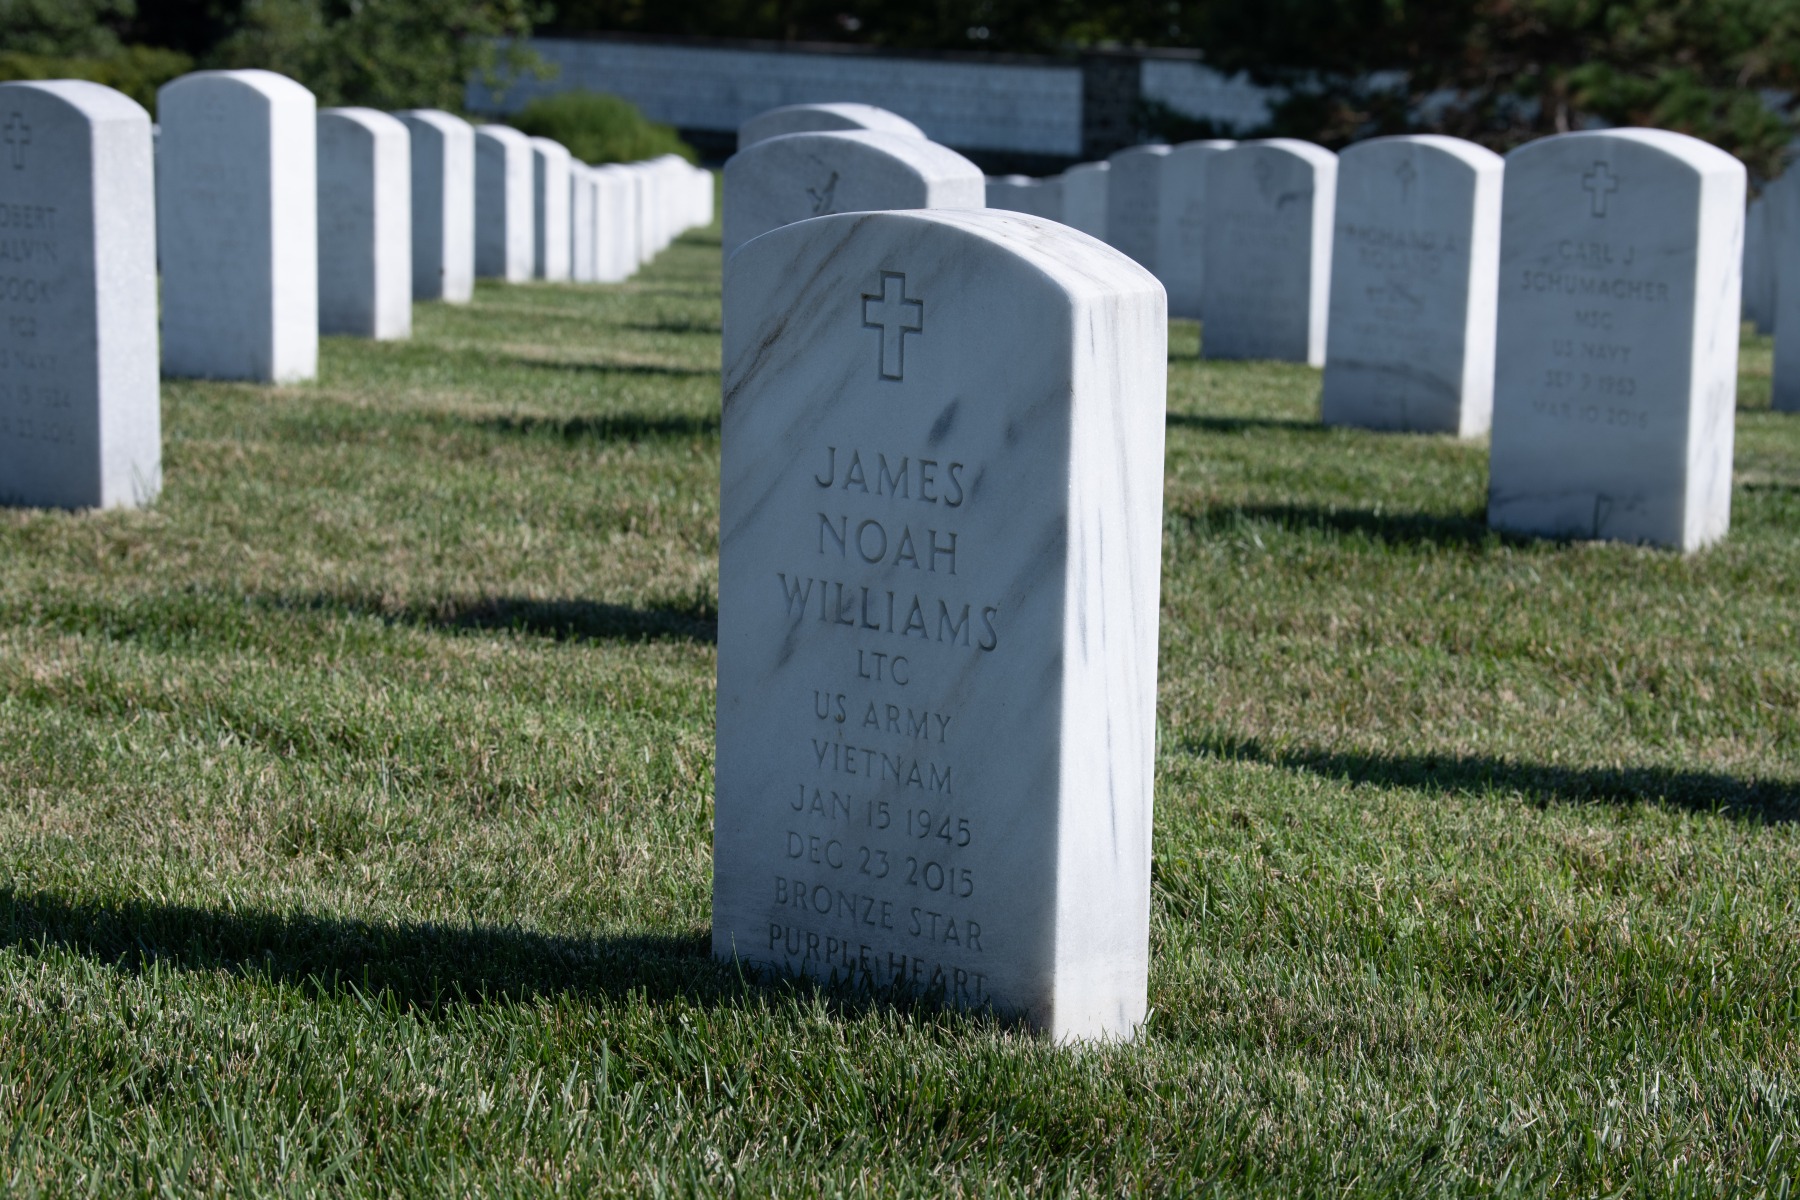 Day 5 – Arlington National Cemetery